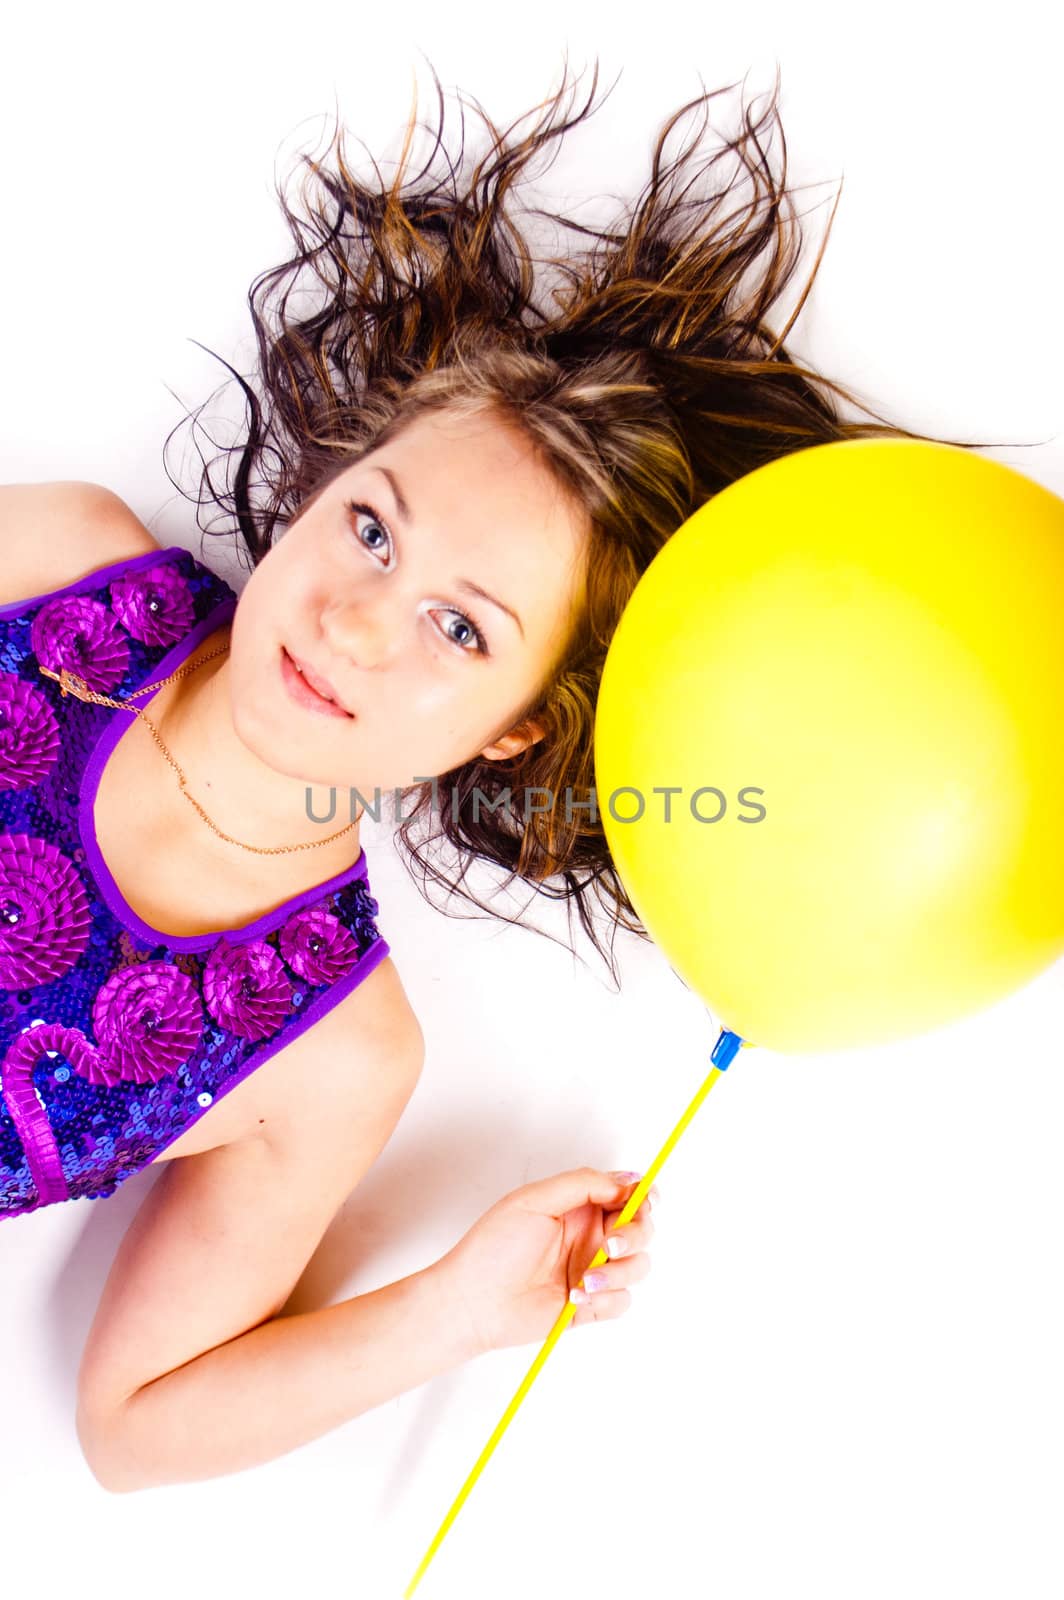 Woman with ballons by malishpsih